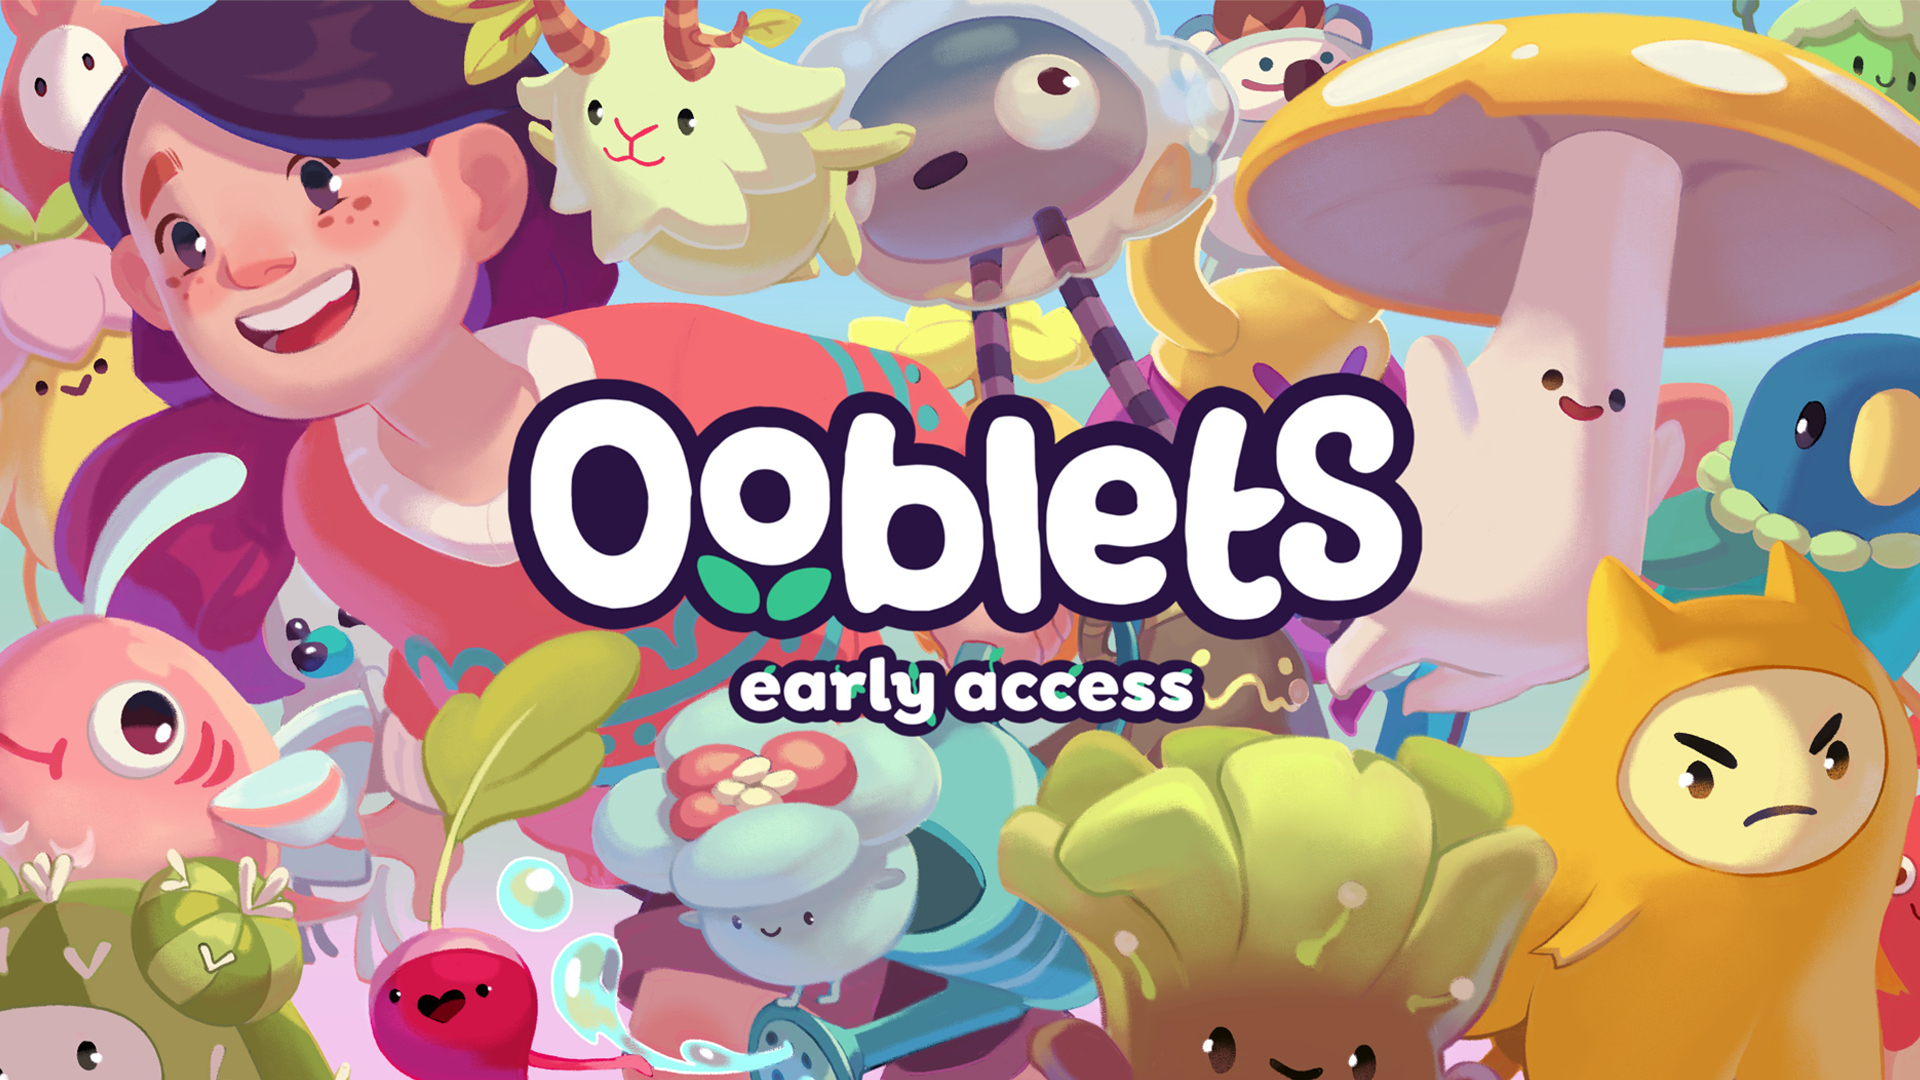 download ooblets epic games